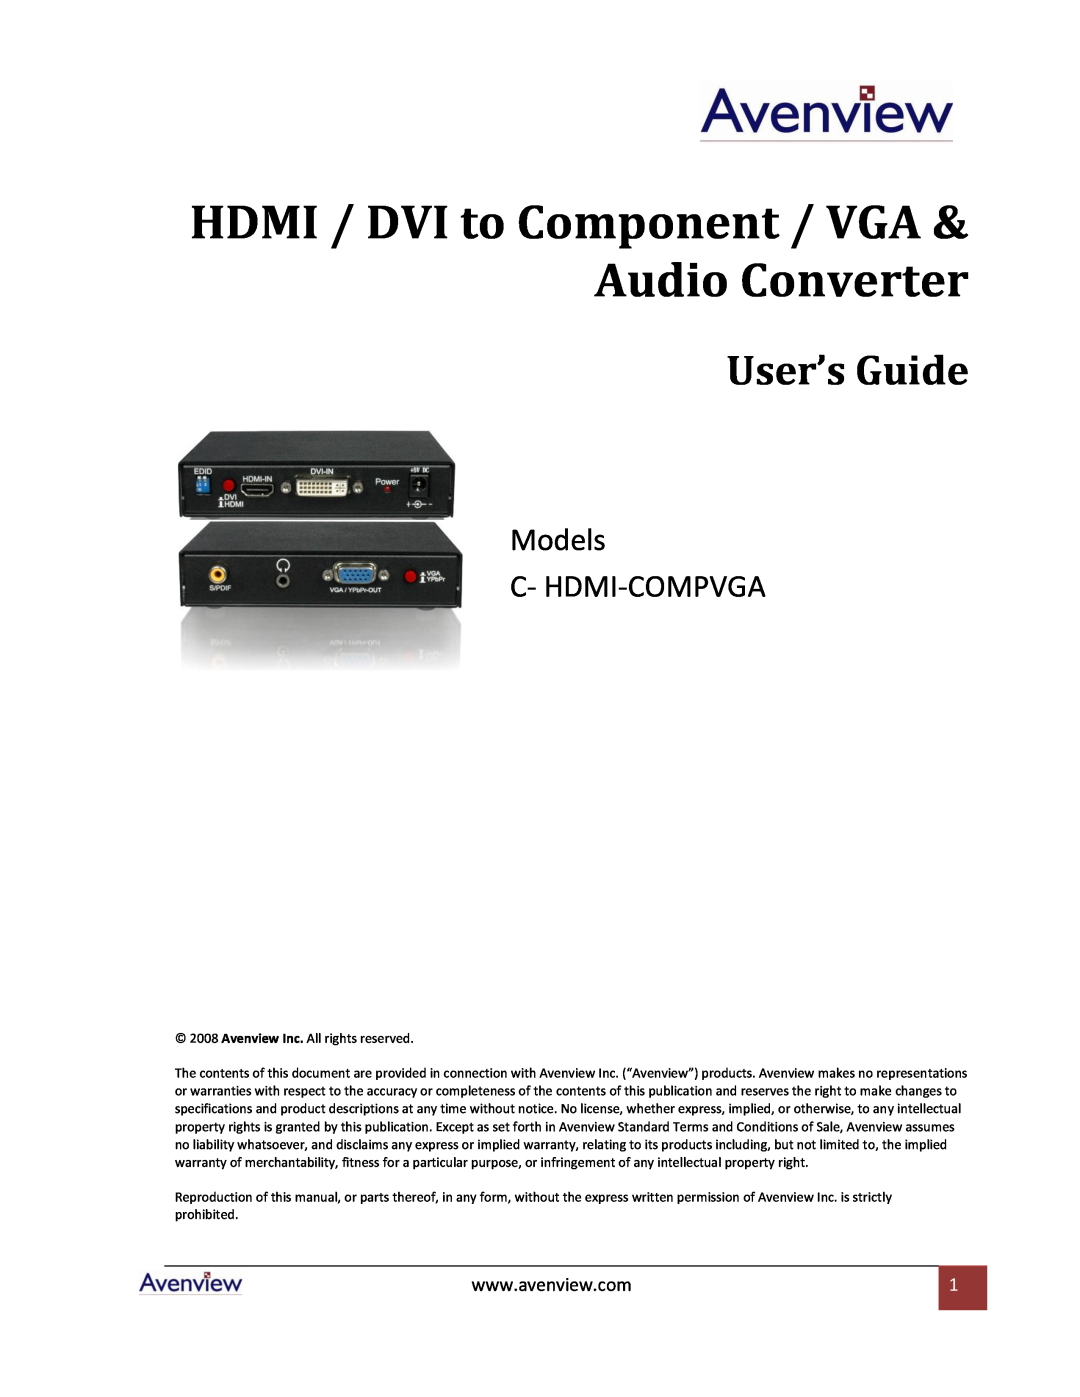 Avenview C-HDMI-COMPVGA specifications HDMI / DVI to Component / VGA & Audio Converter, User’s Guide 